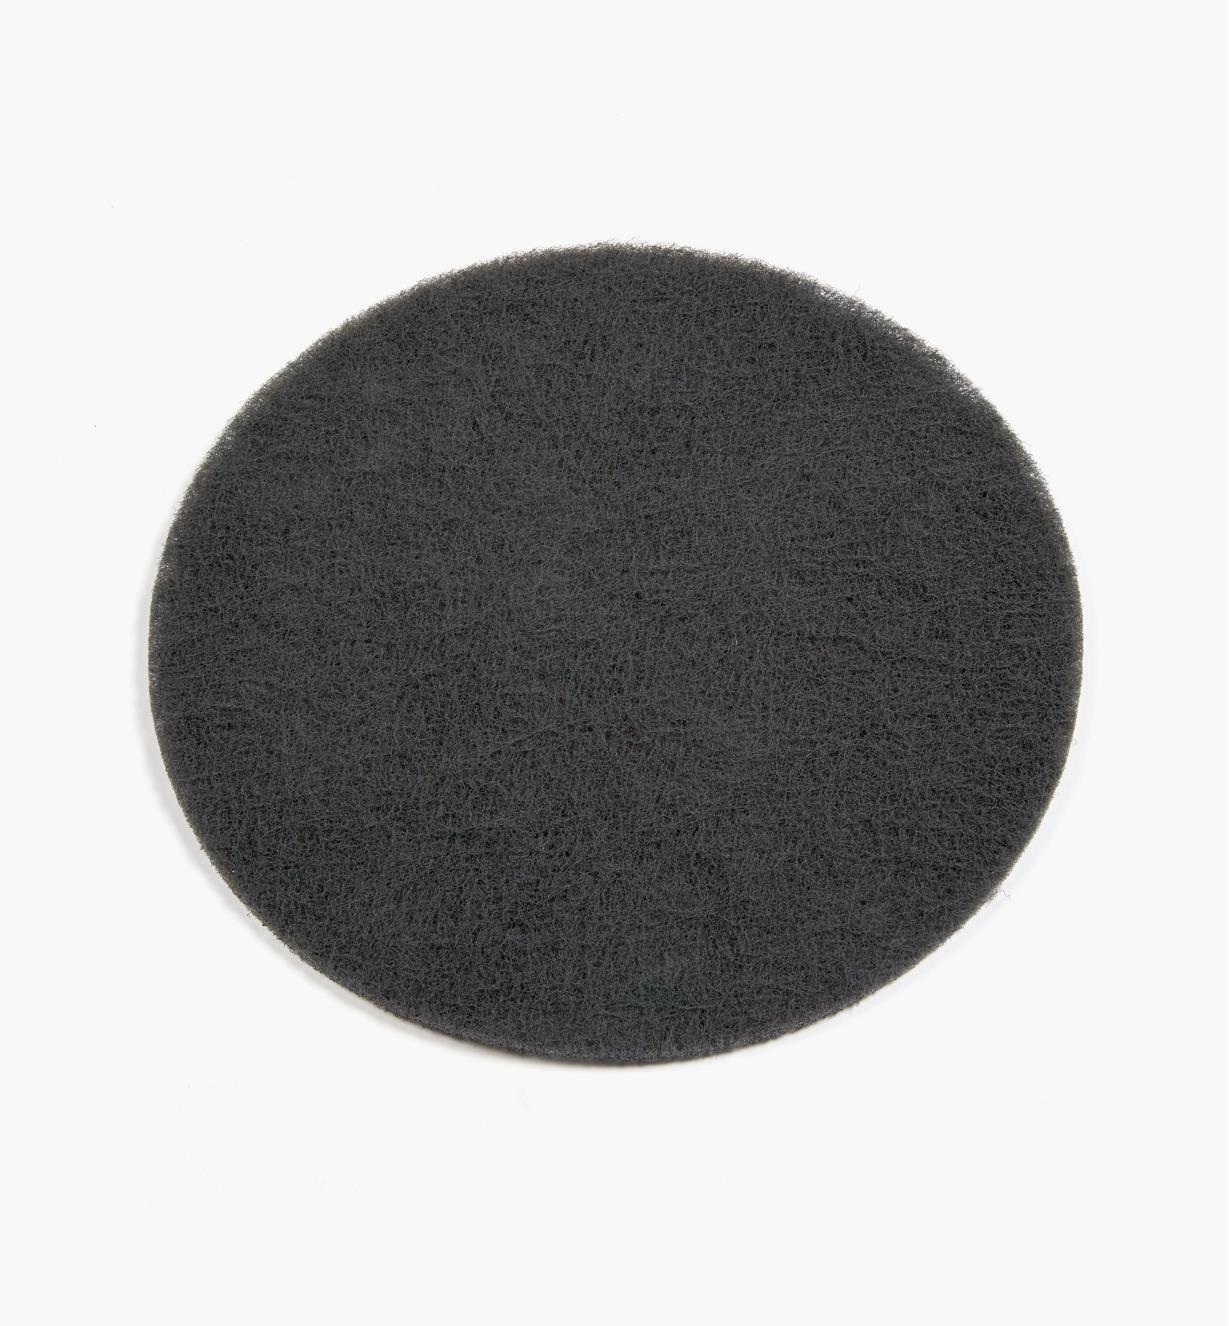 08K2892 - Tampon abrasif Mirlon XF noir, 9 po, grain 800